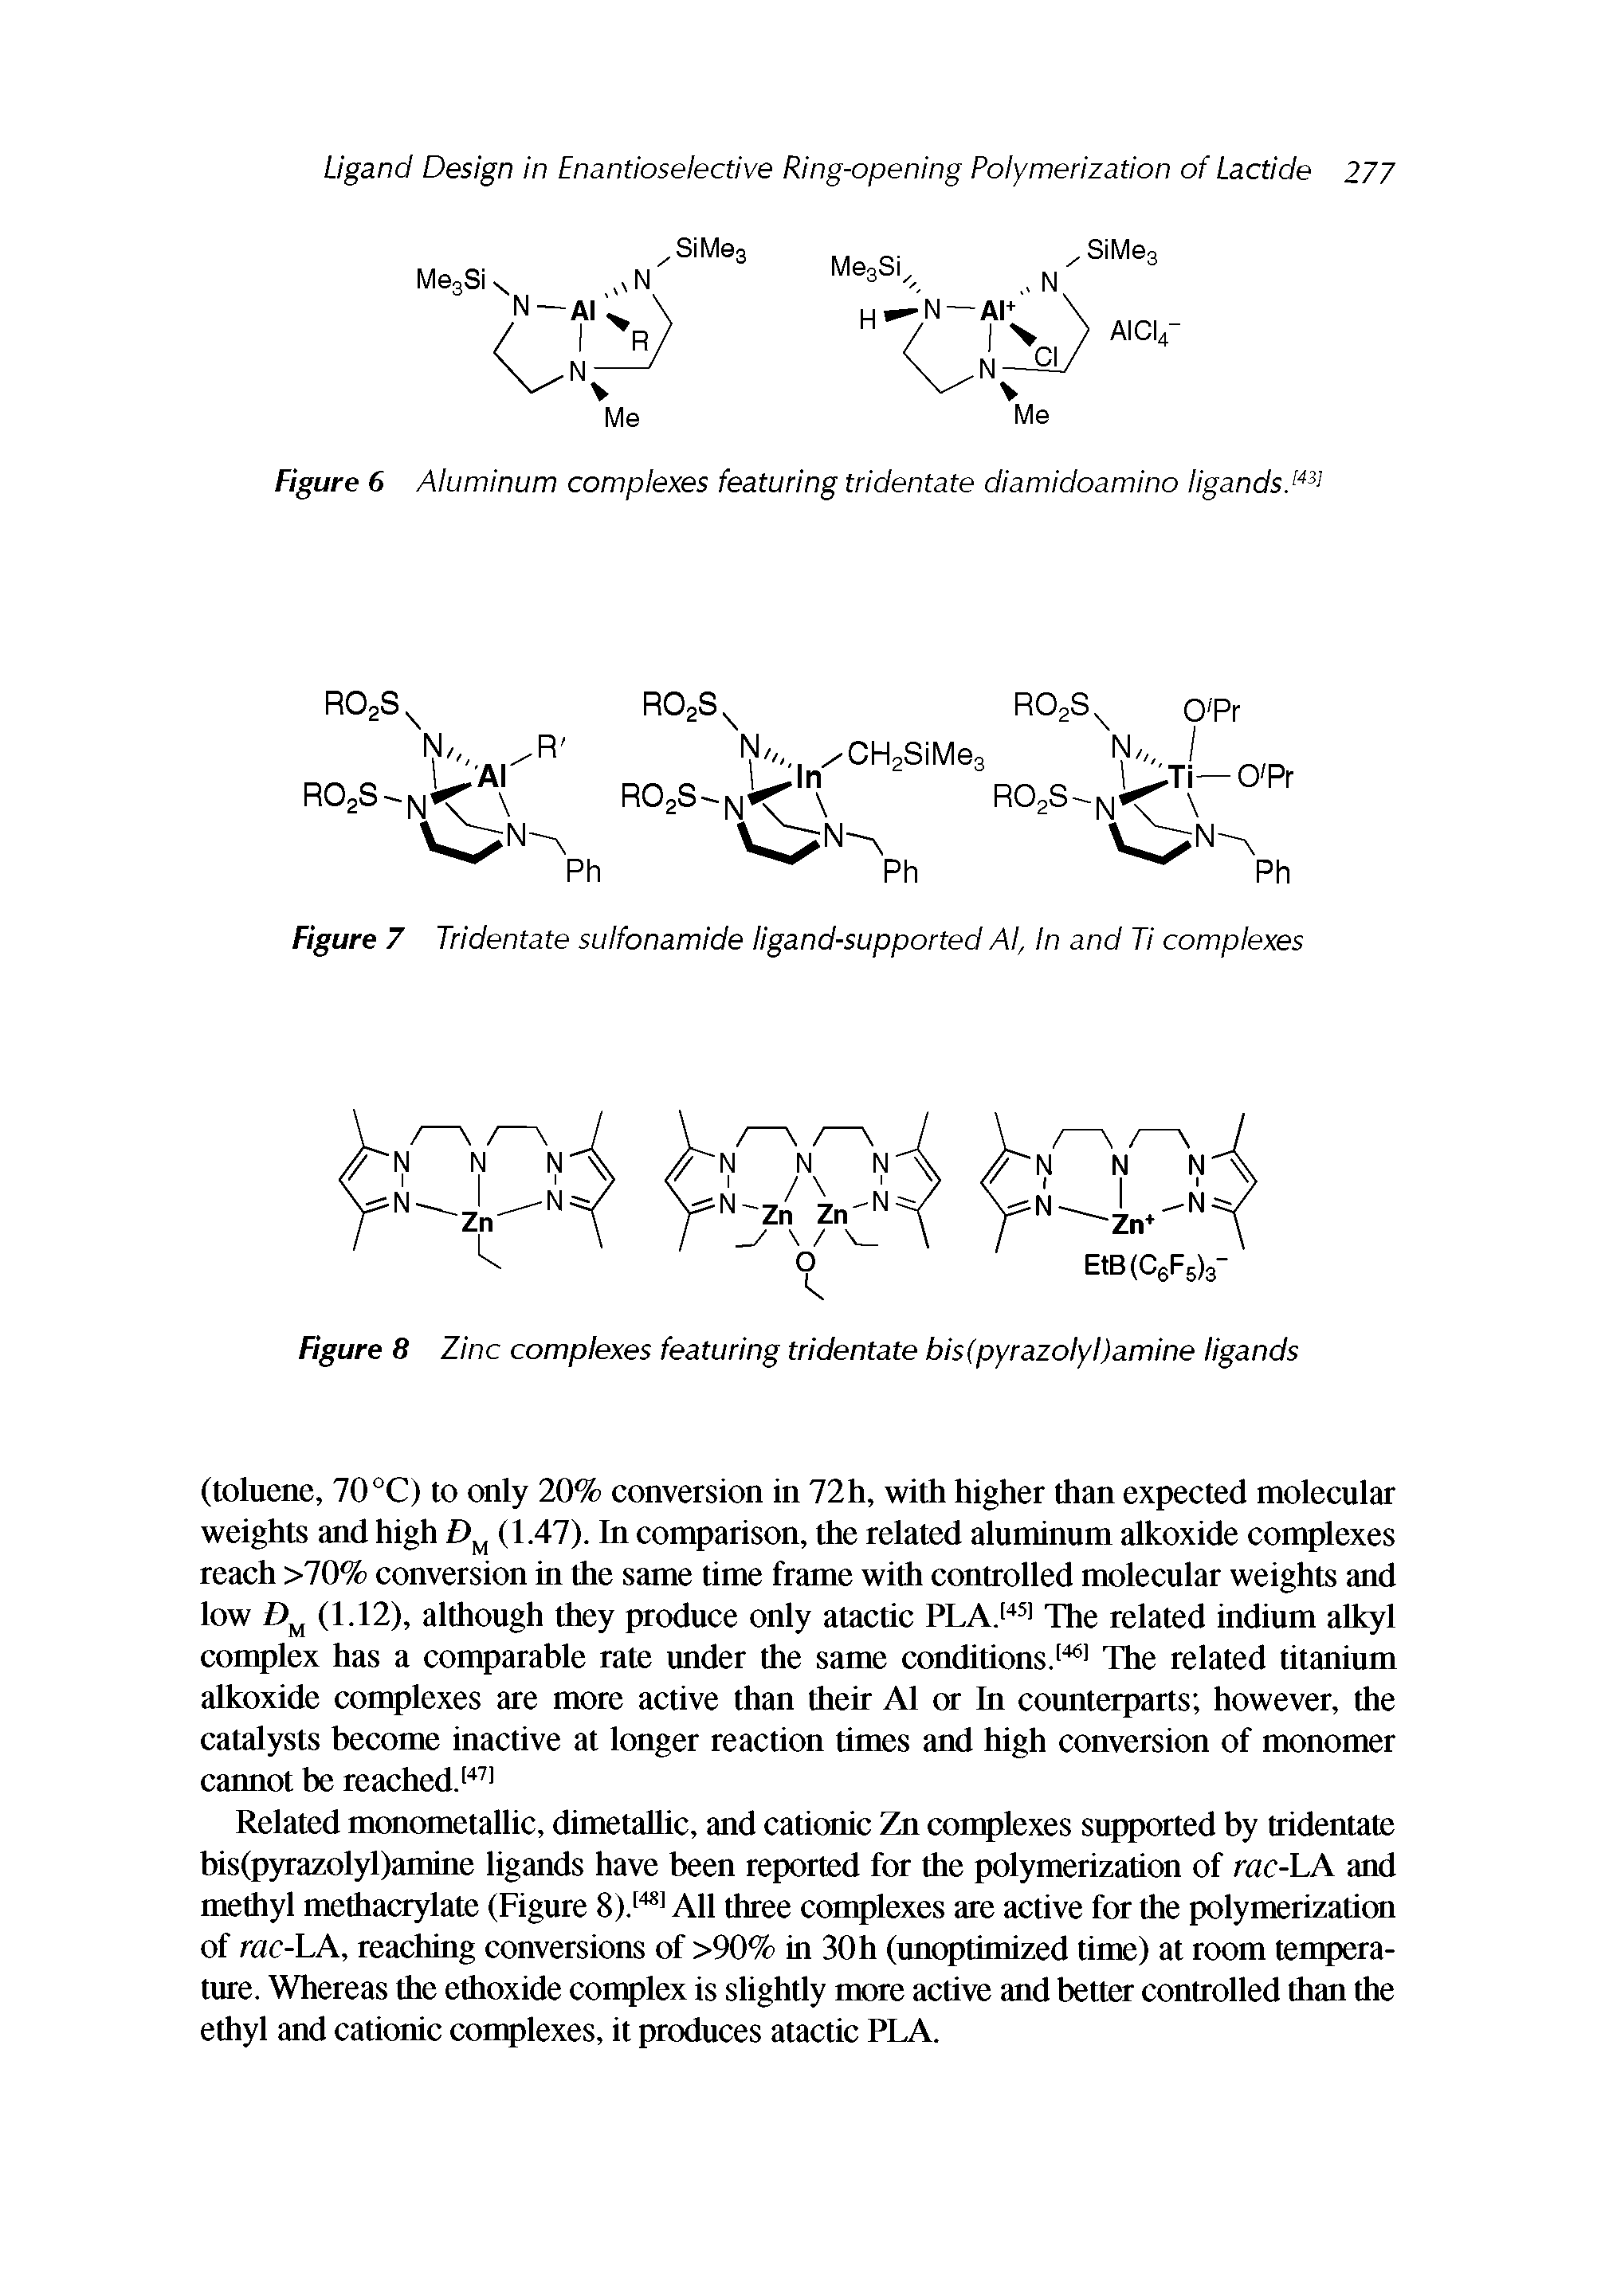 Figure 8 Zinc complexes featuring tridentate bis(pyrazolyl)amine ligands...